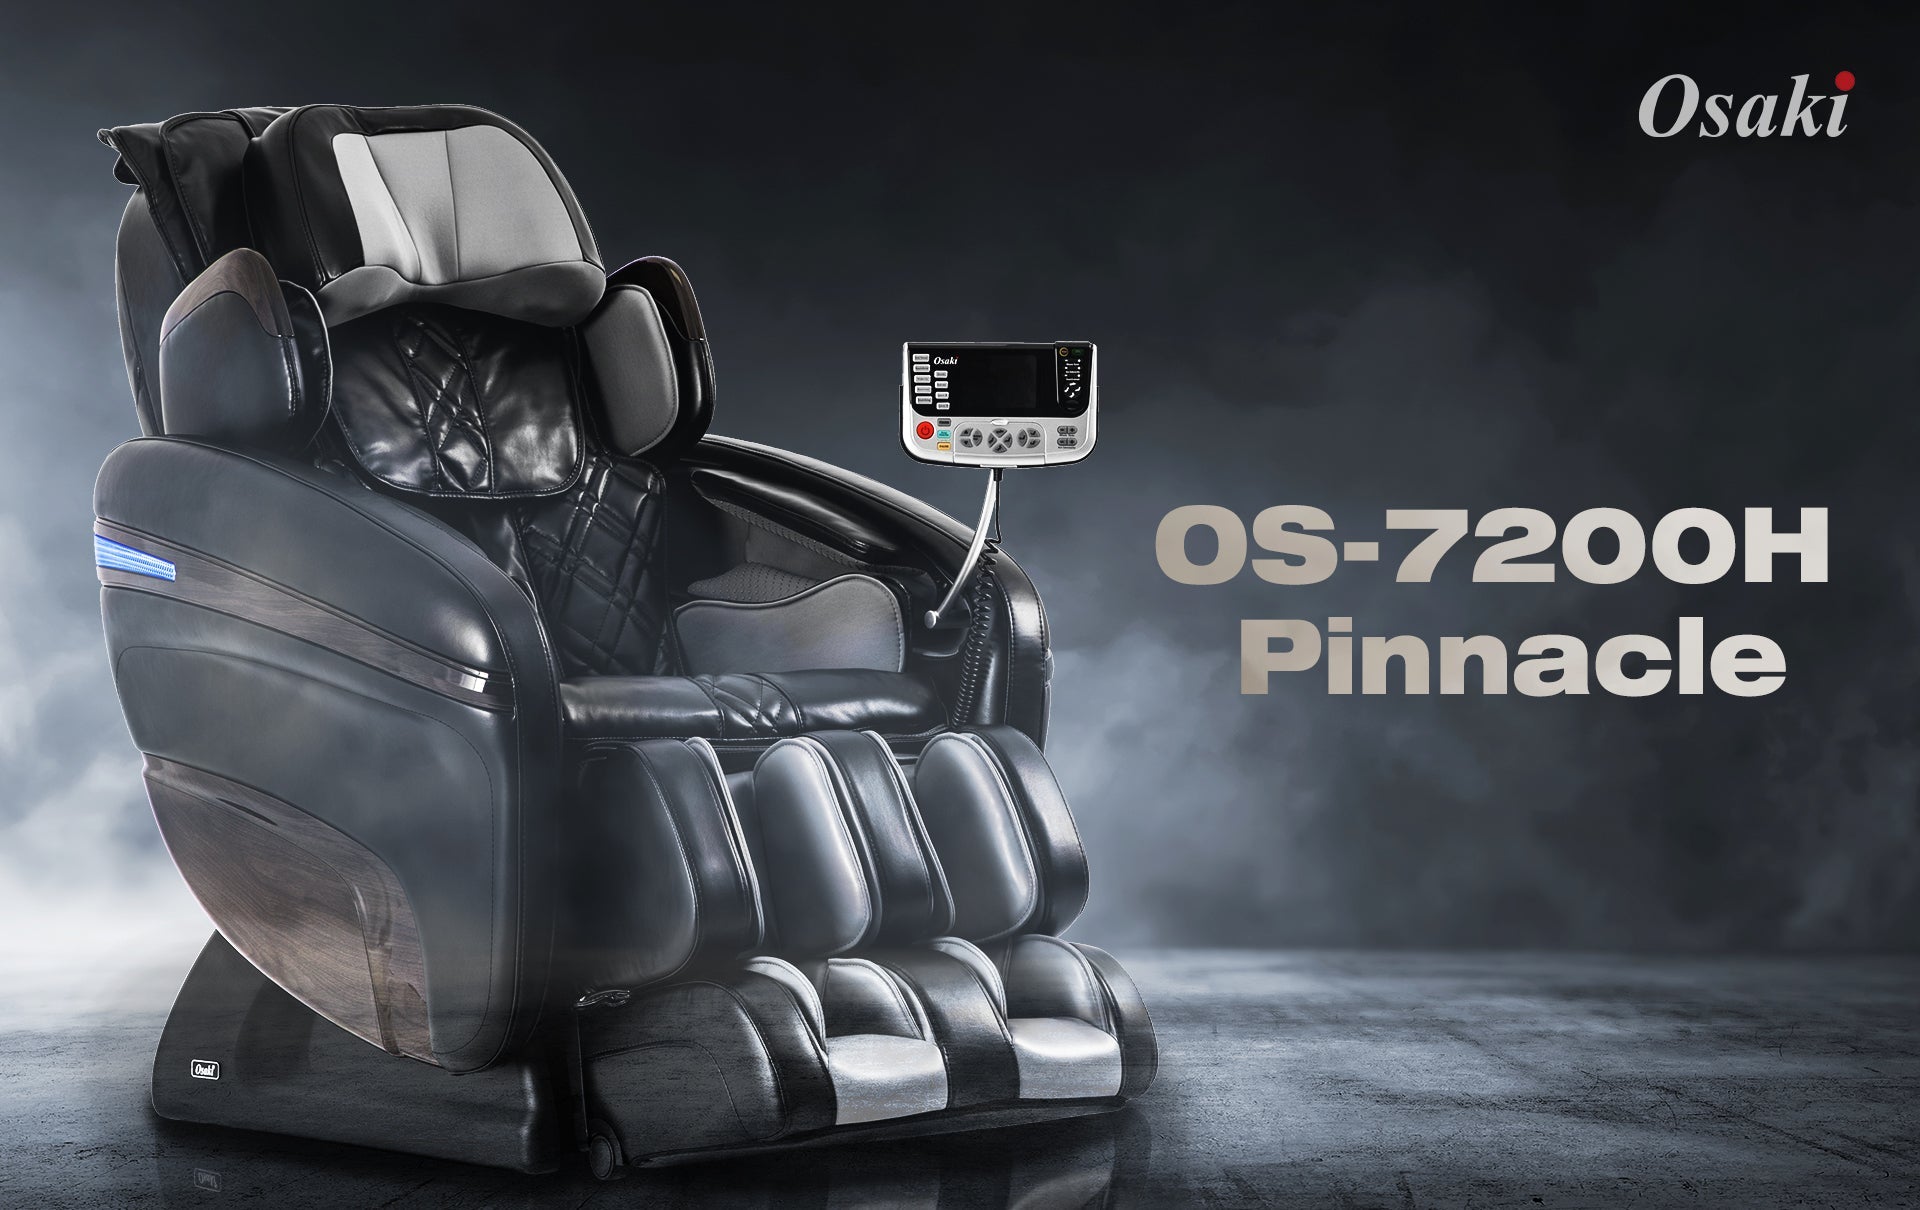 Osaki OS-7200H Pinnacle